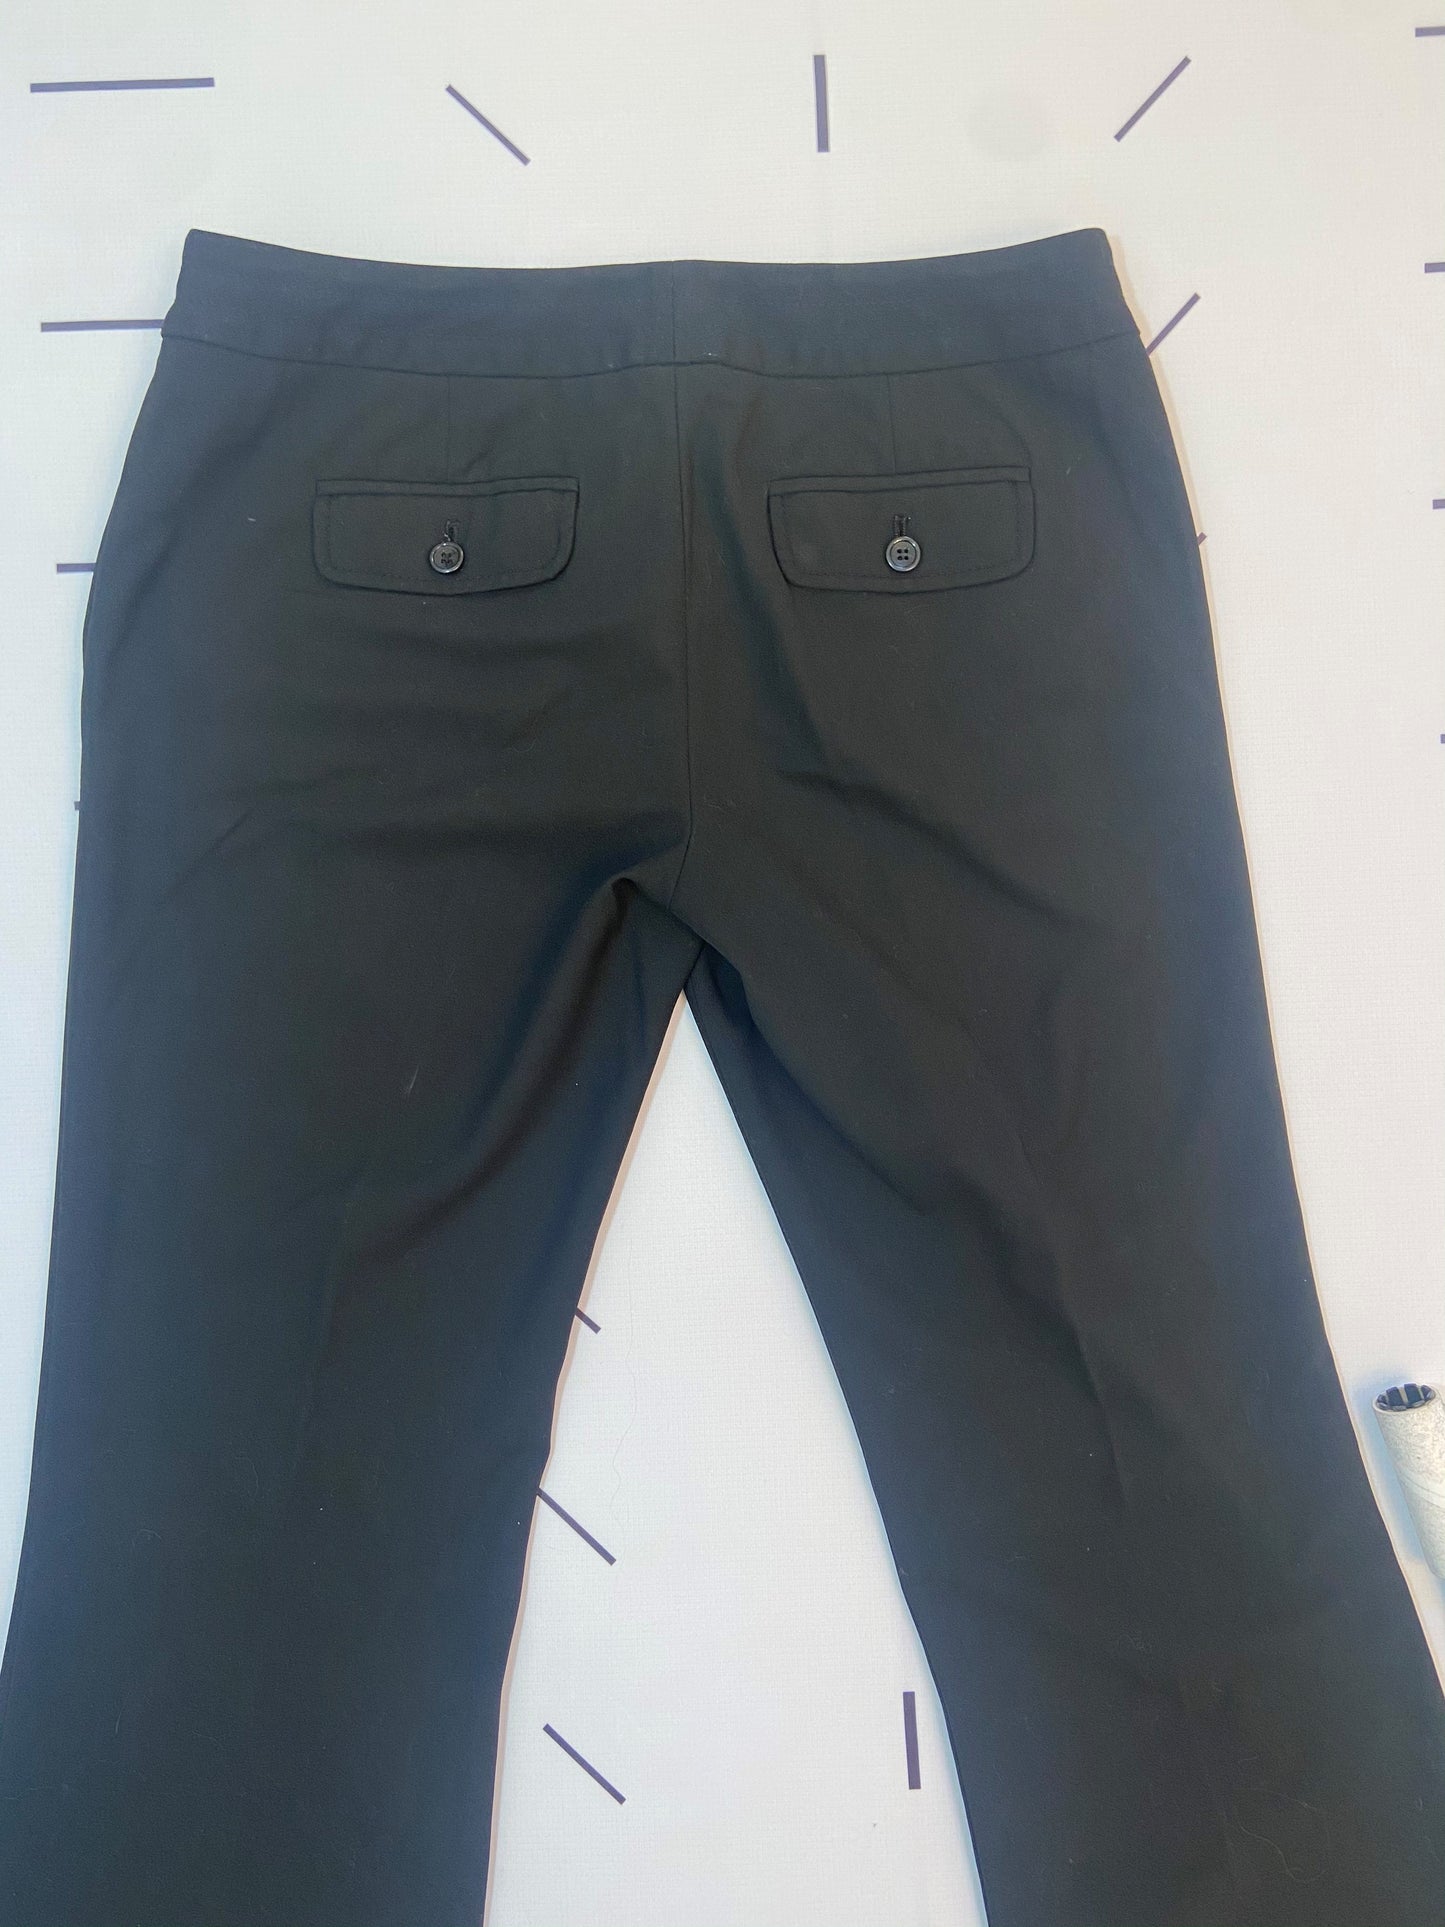 Black Boot Cut Dress Pants - S (4 Reg)